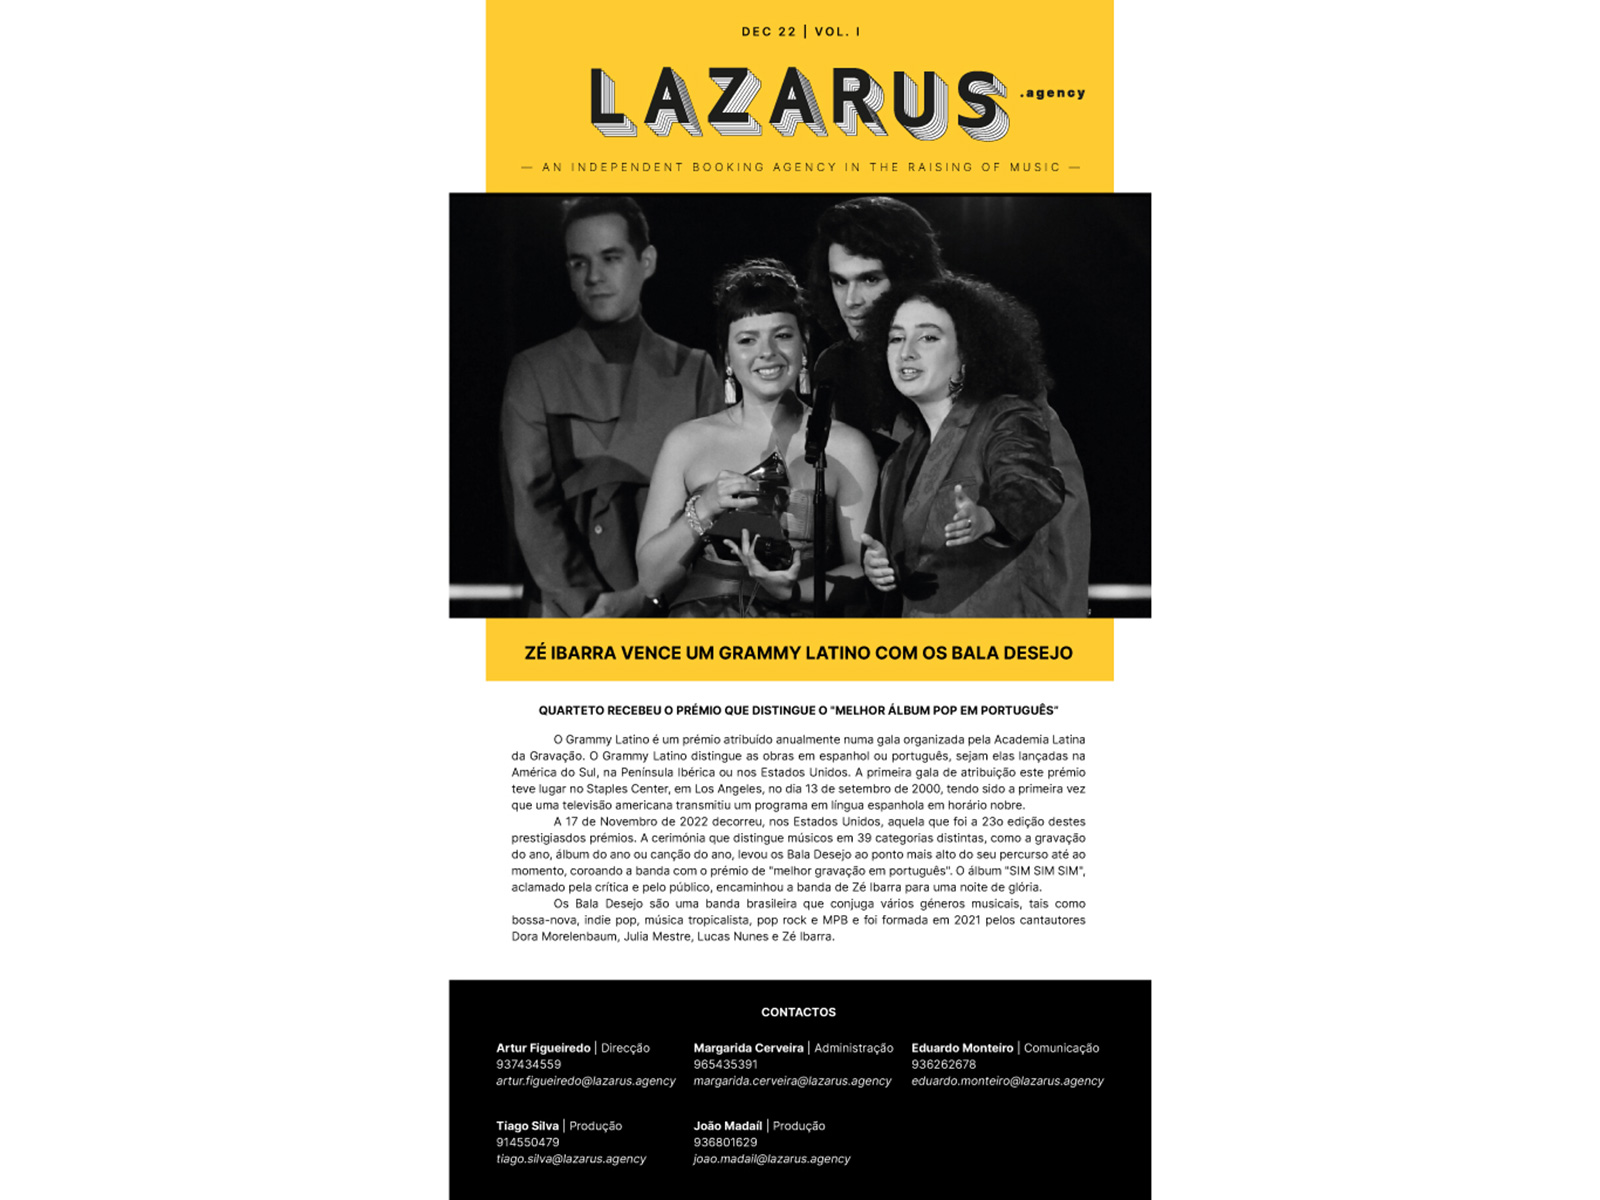 Lazarus Agency - 3